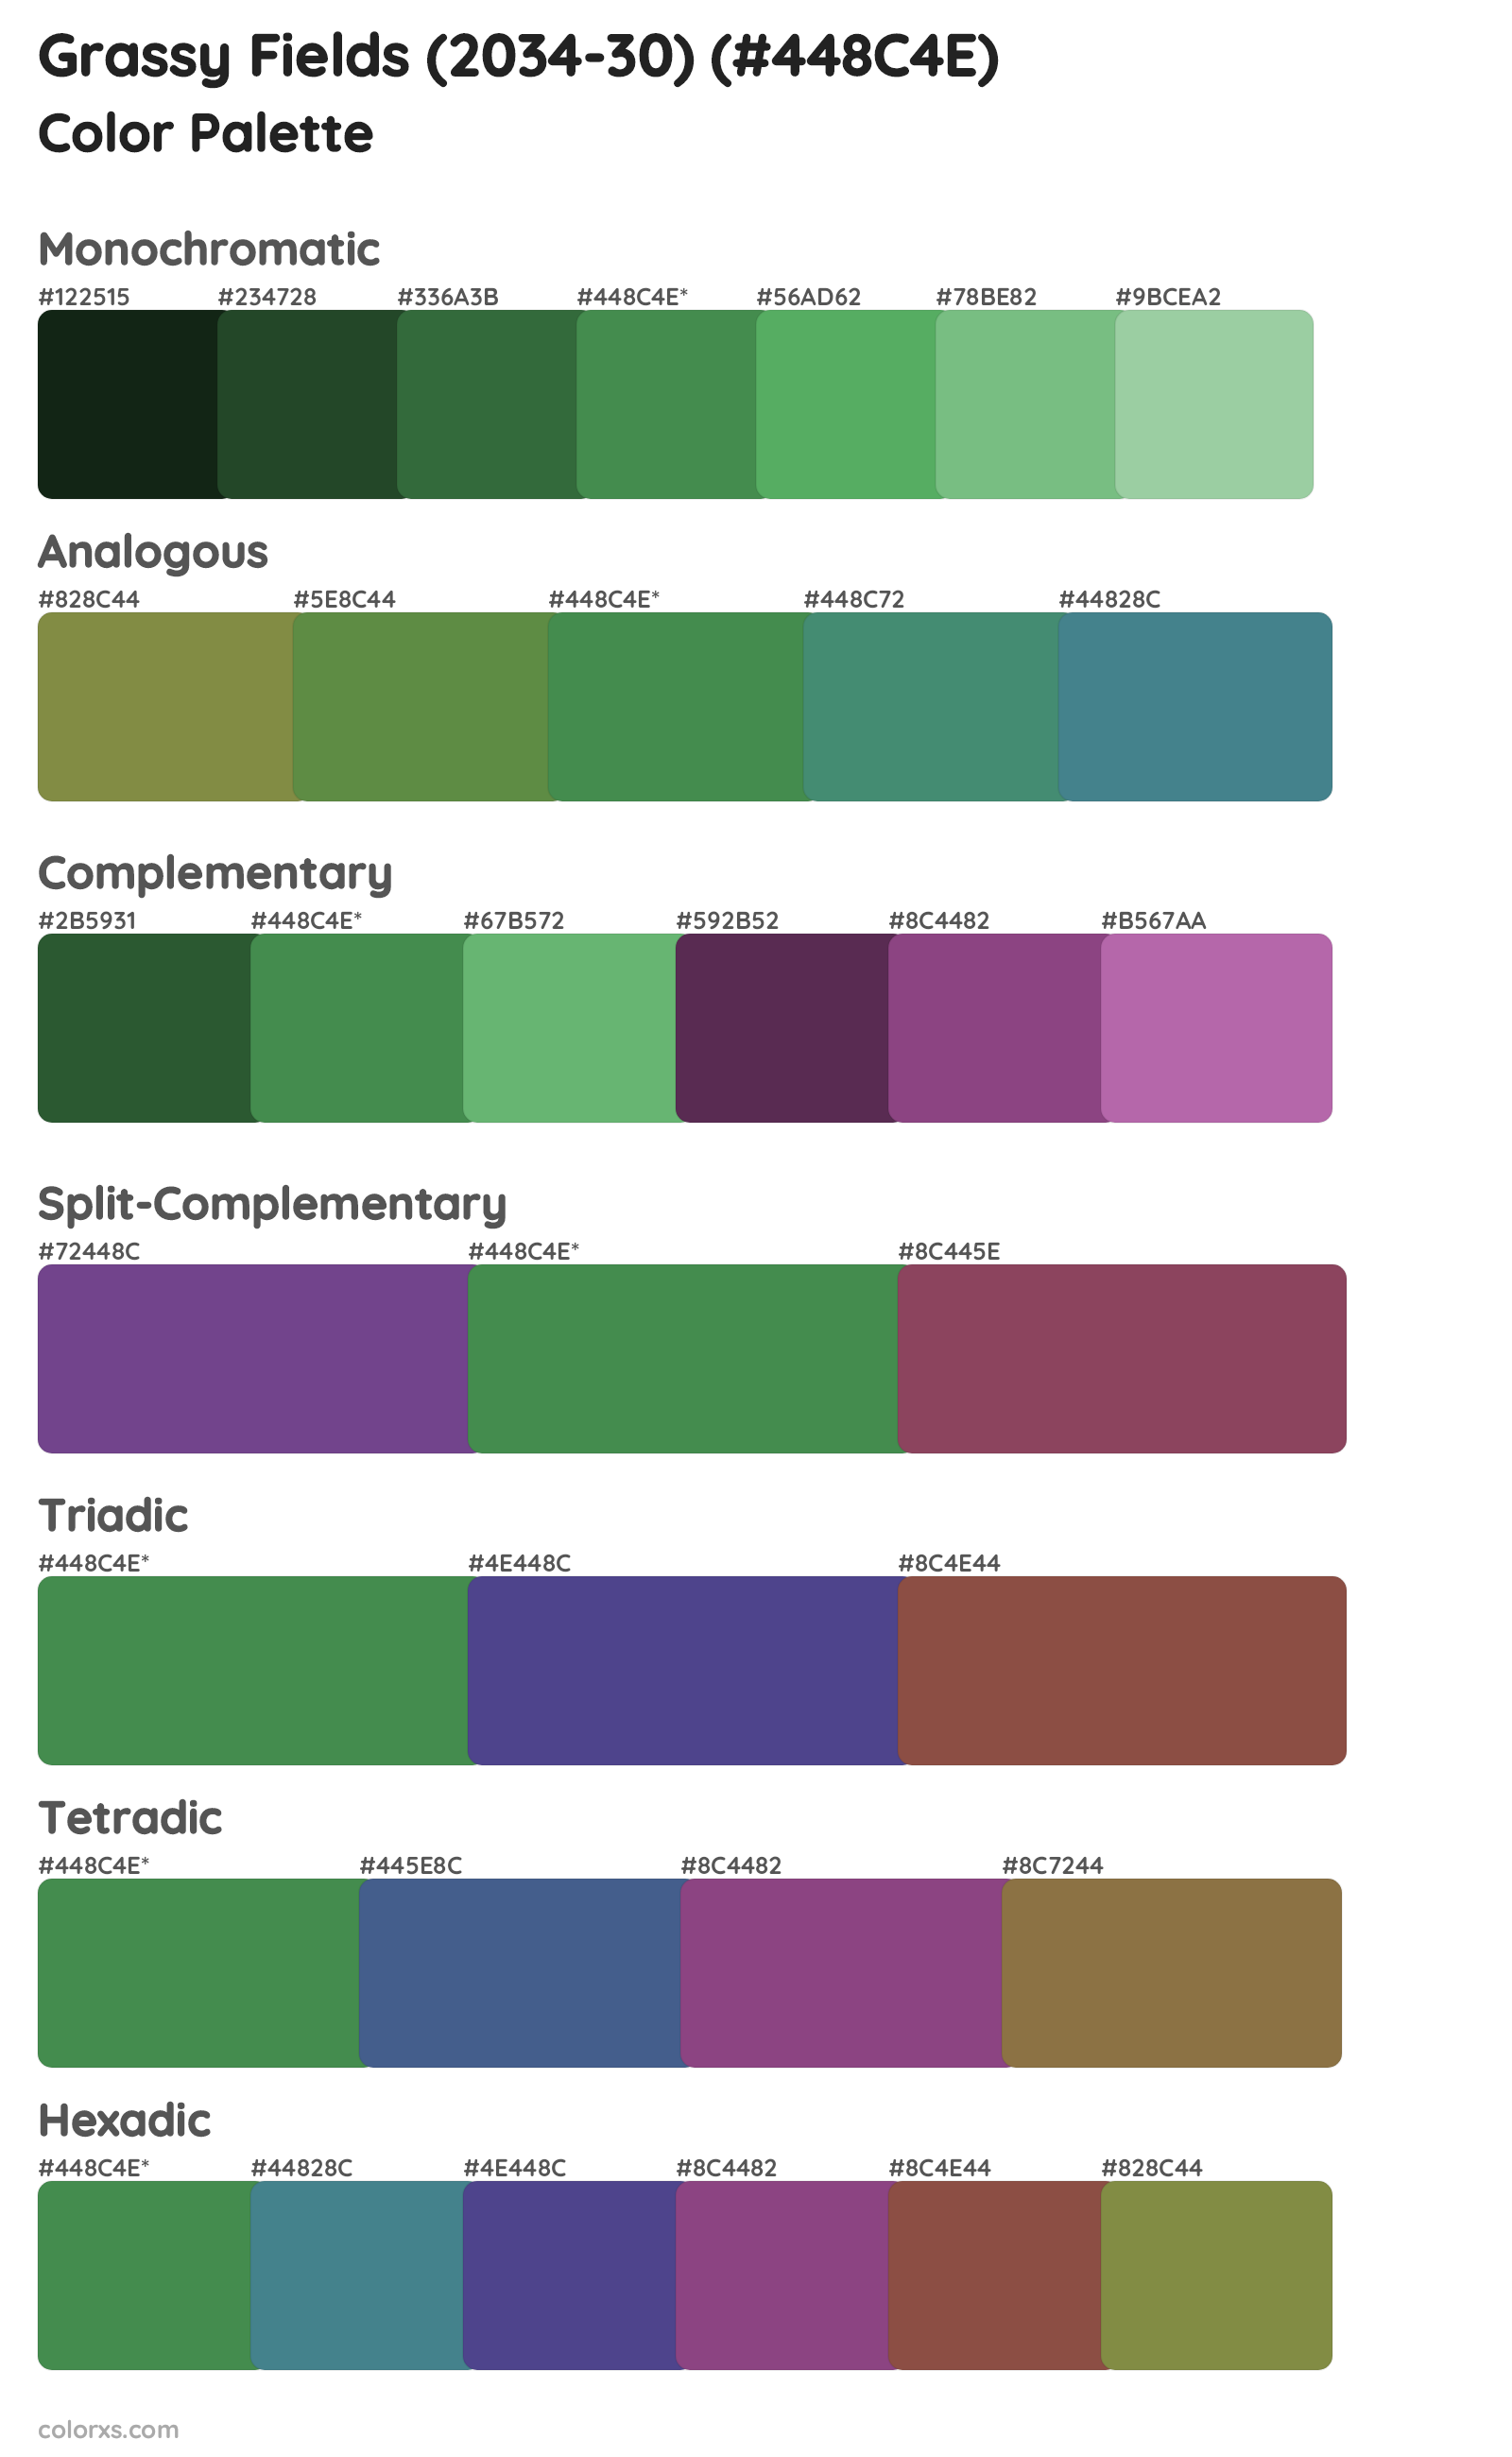 Grassy Fields (2034-30) Color Scheme Palettes